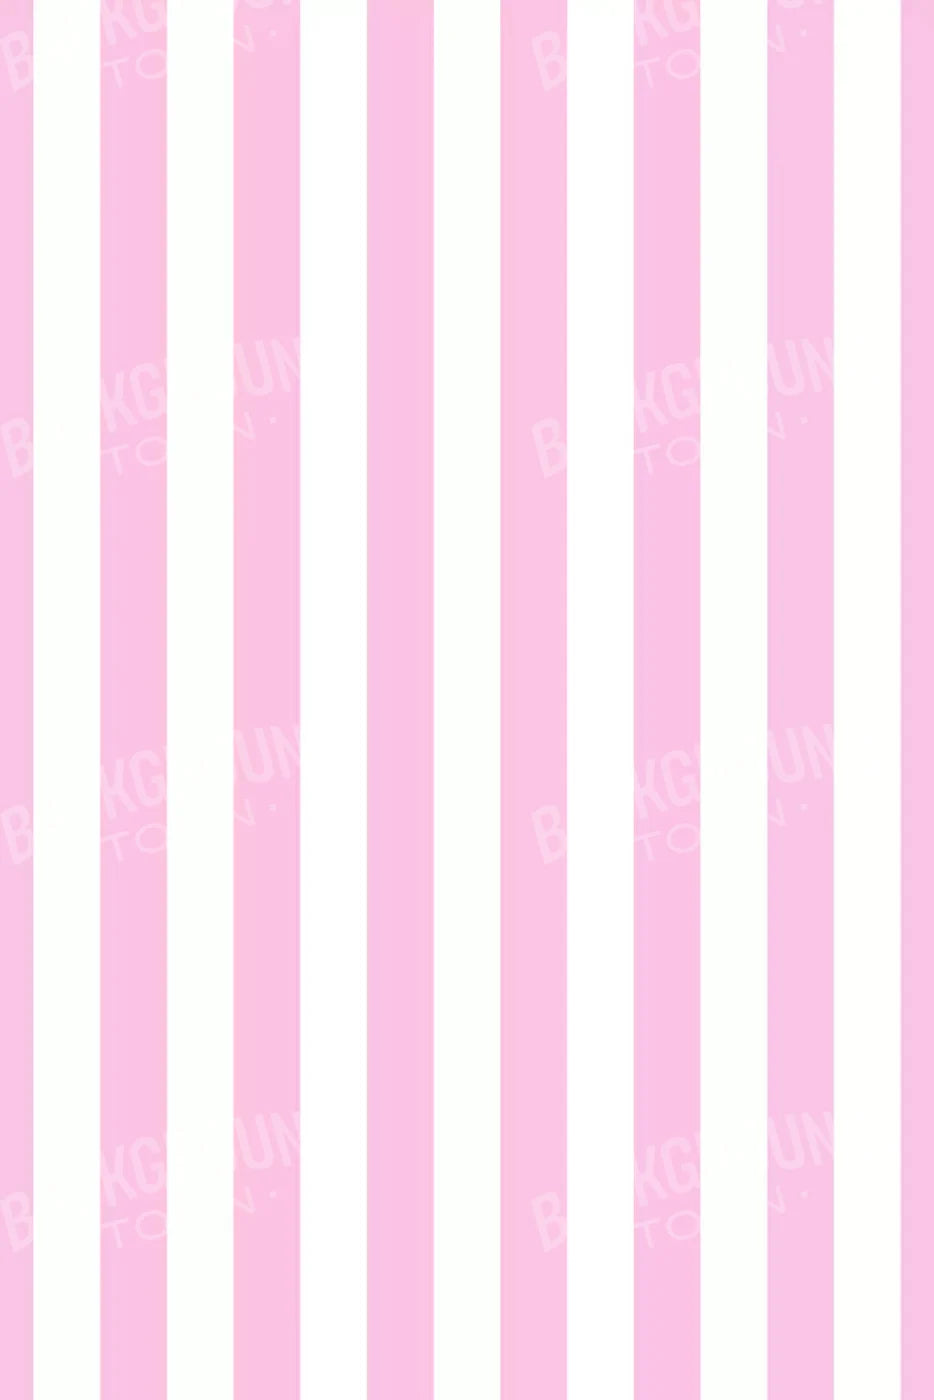 Candy Stripe 5X8 Ultracloth ( 60 X 96 Inch ) Backdrop